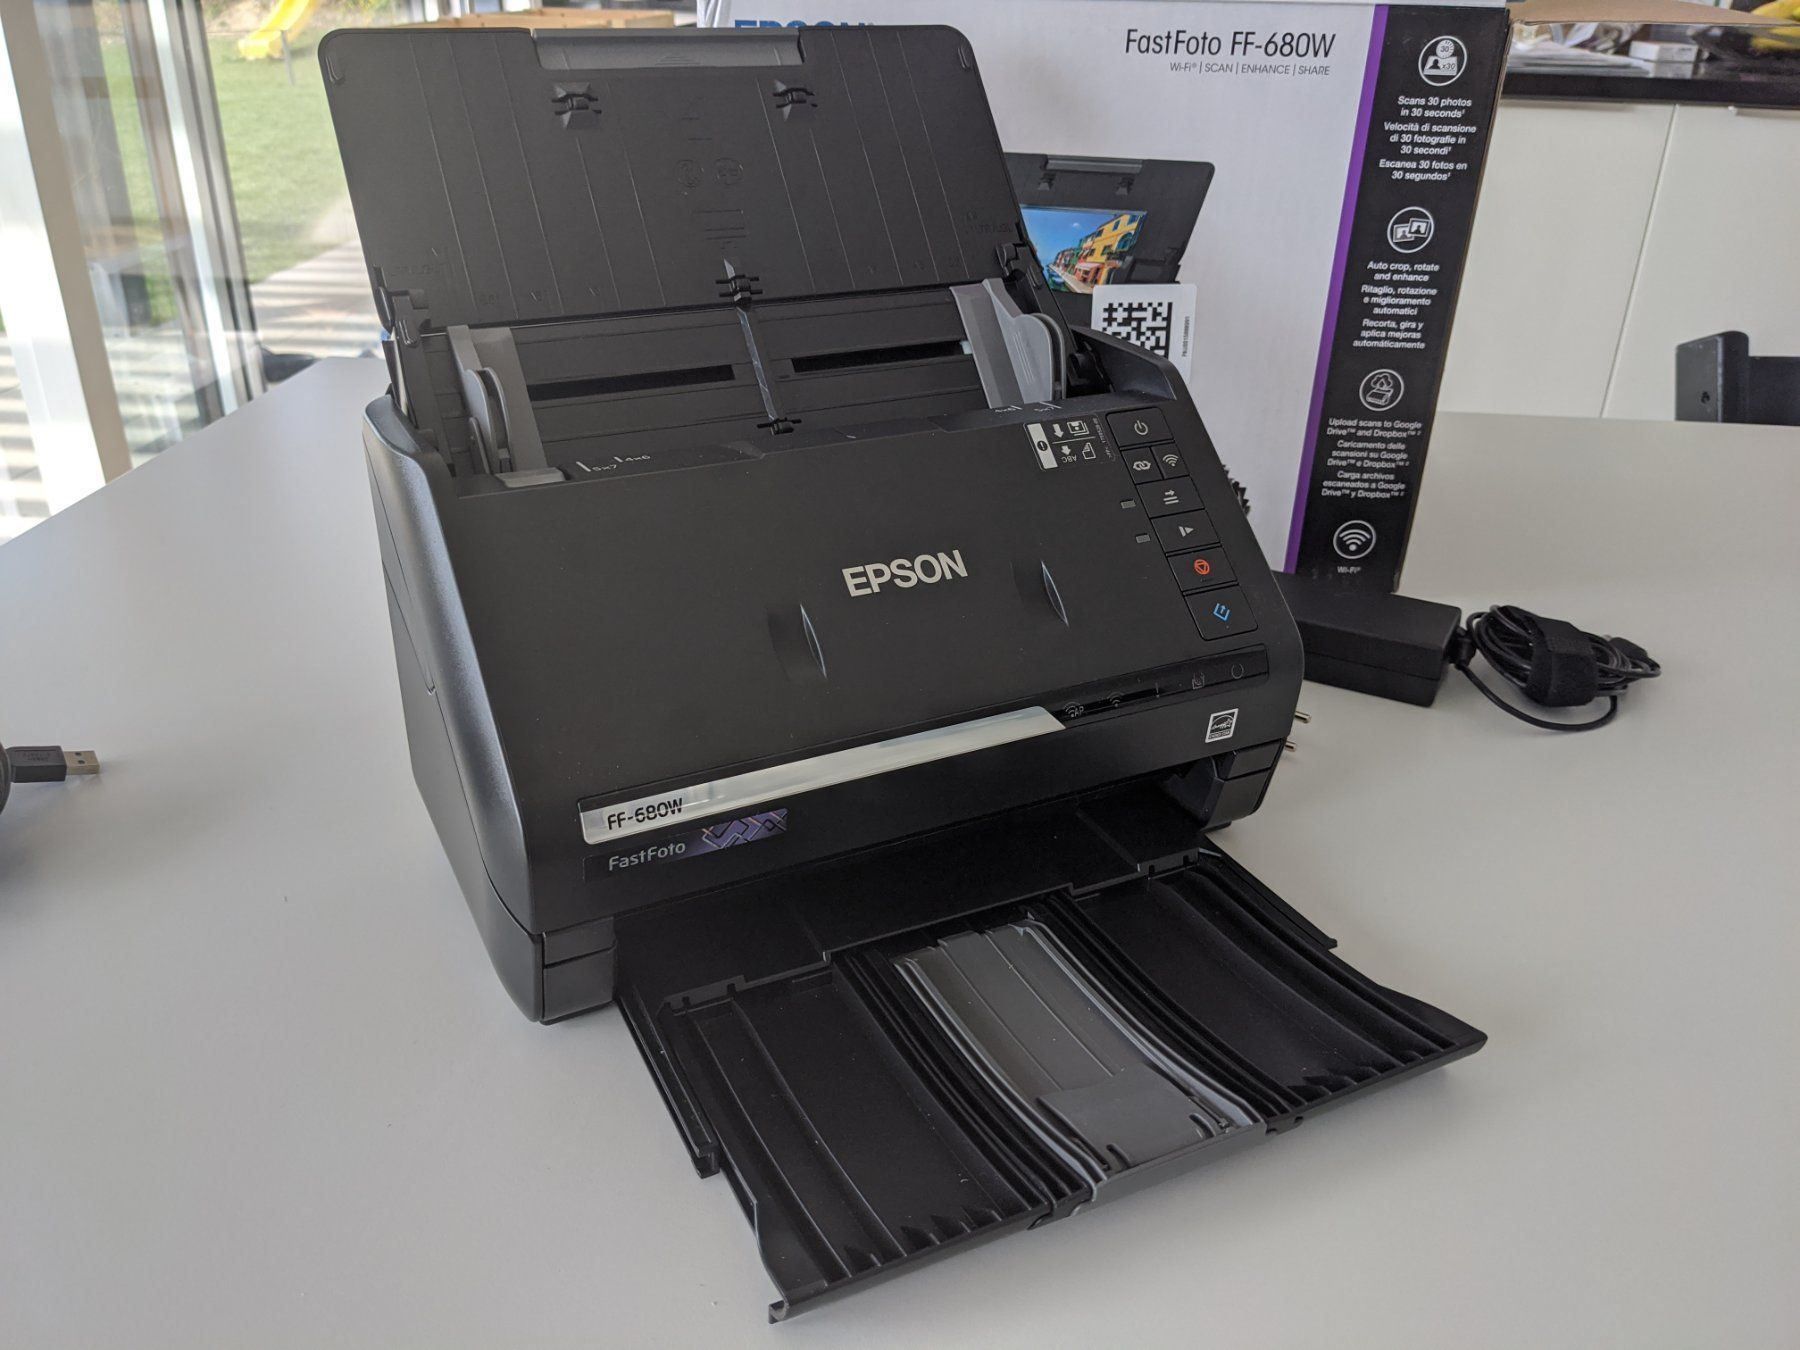  Epson  FF 680W Fast  Foto Scanner Kaufen auf Ricardo